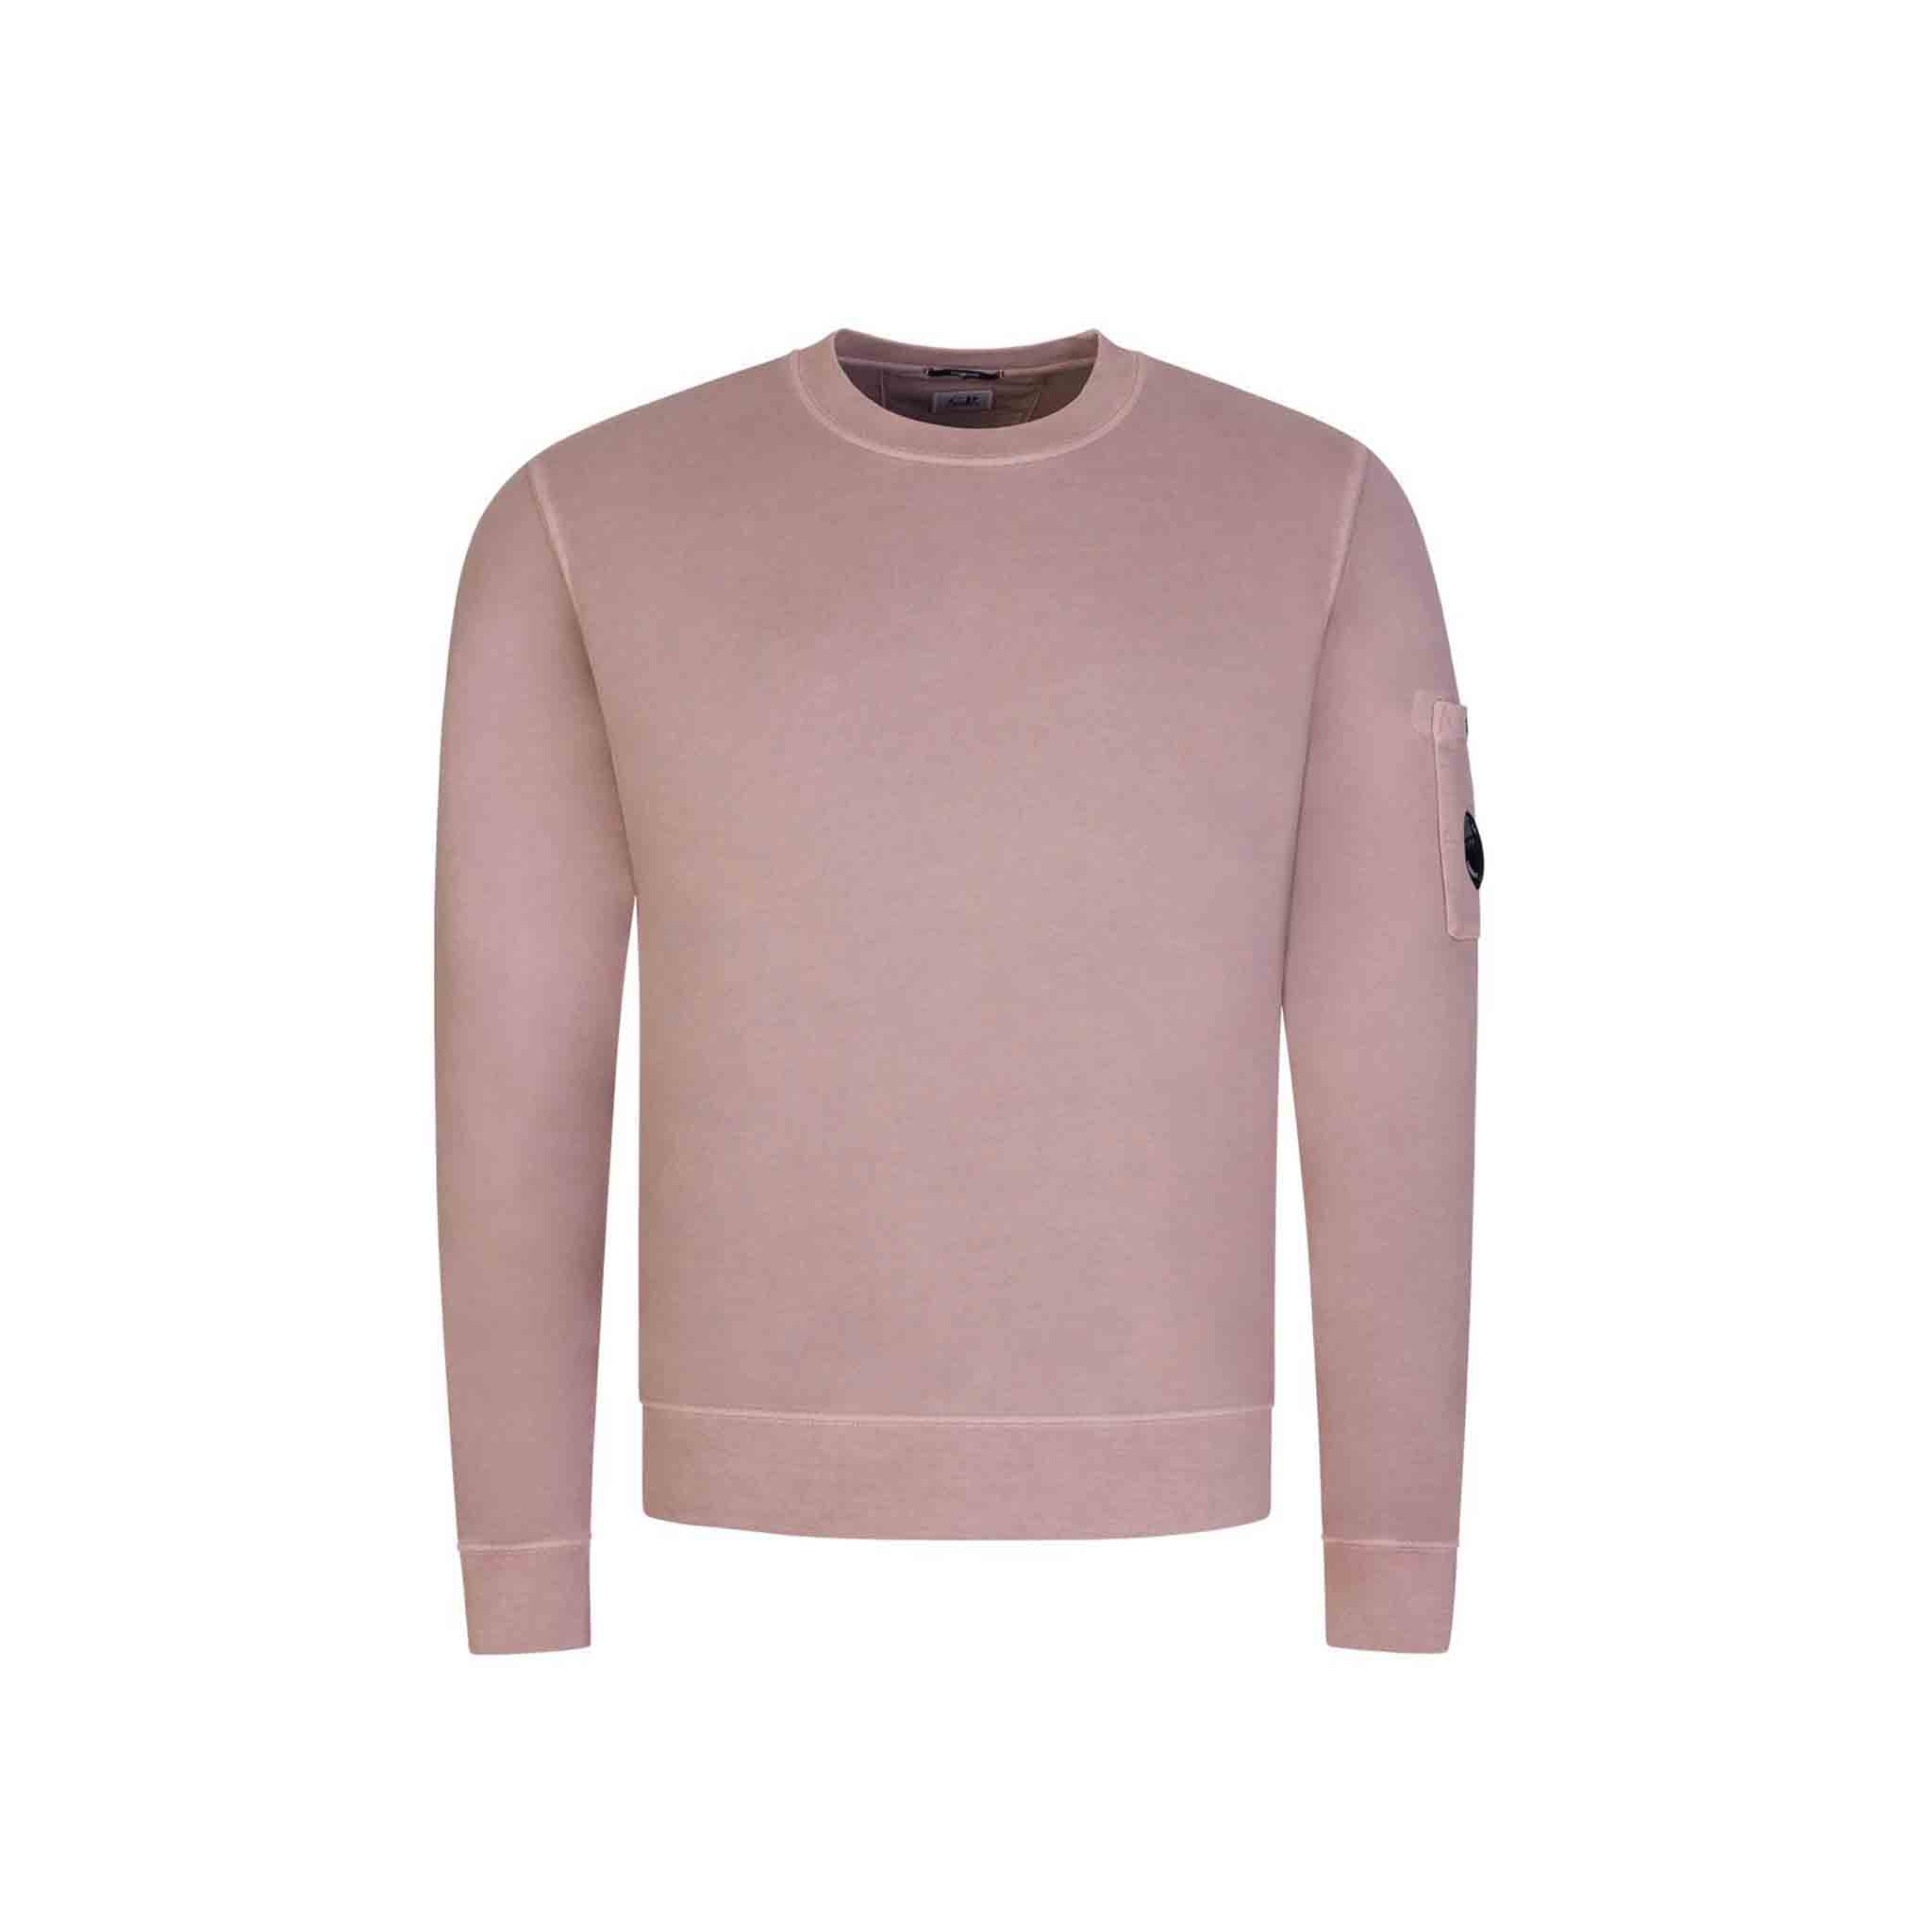 C.P. Company Resist Dyed Sweatshirt in Dusty Pink